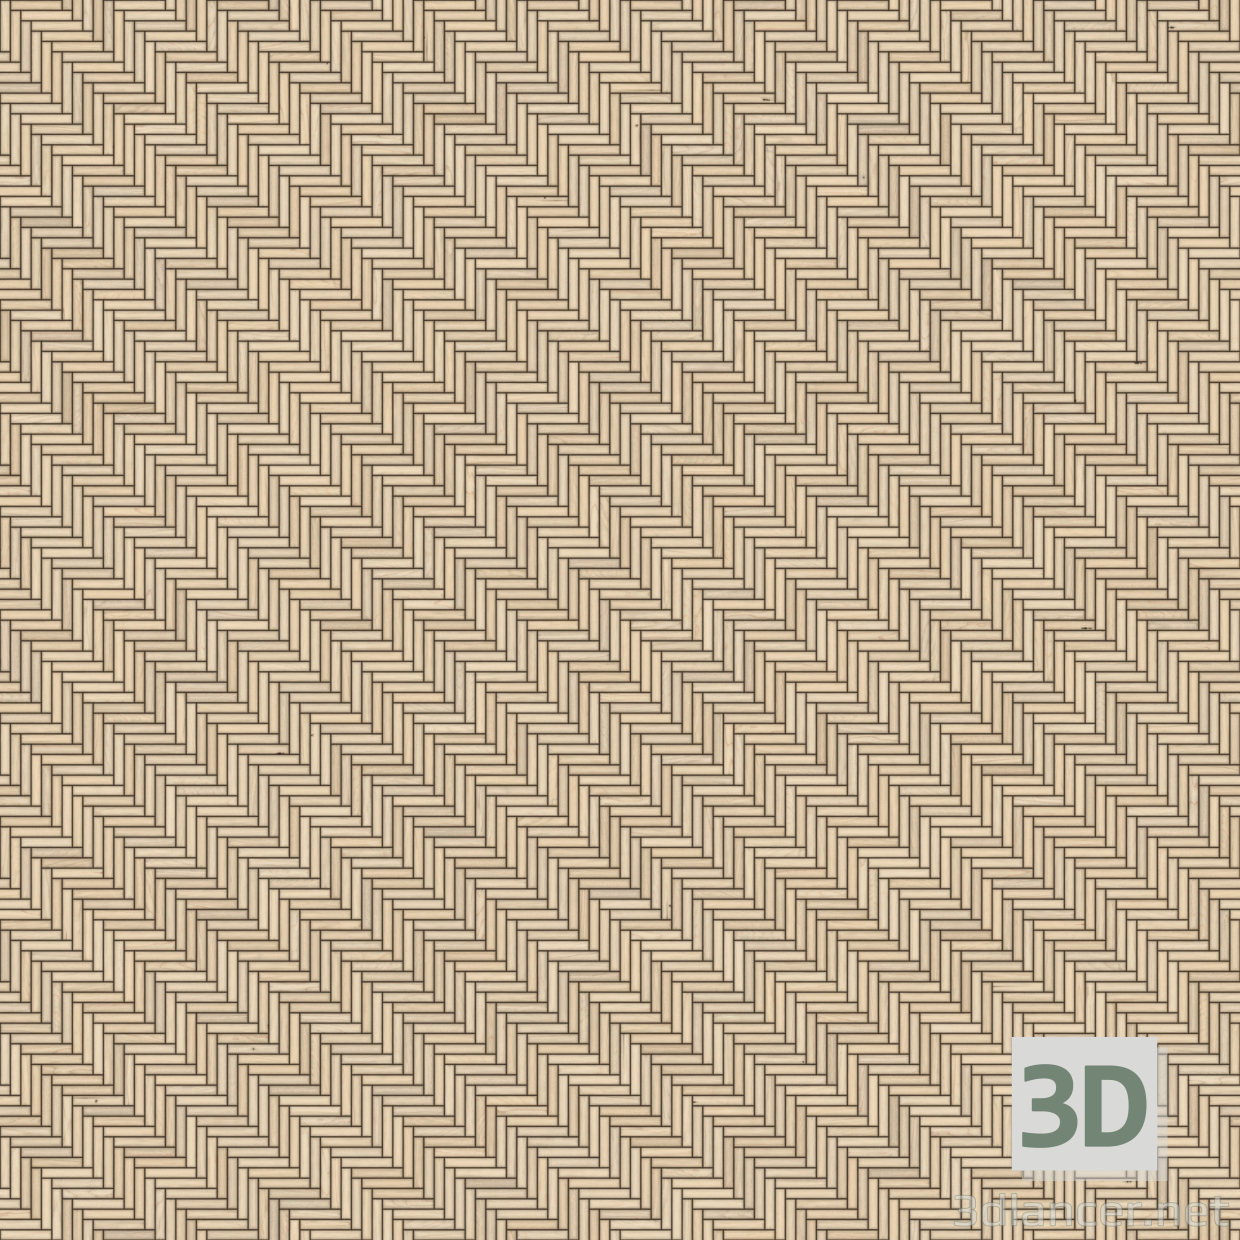 Texture parquet 46 free download - image